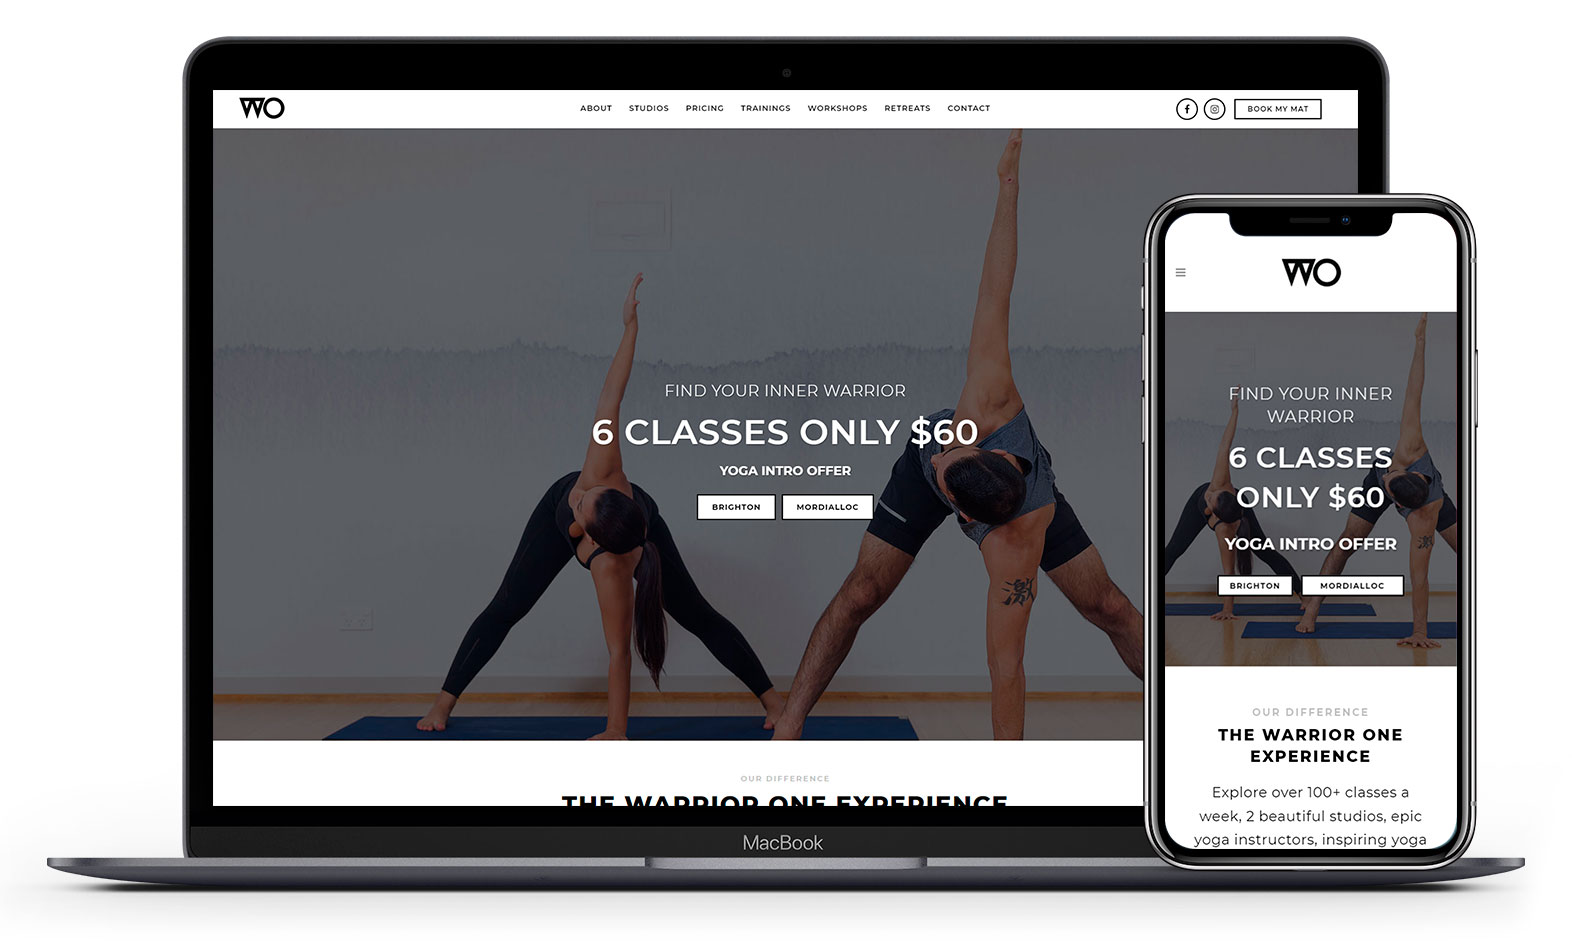 Warrior one yoga's website design displayed responsive devices